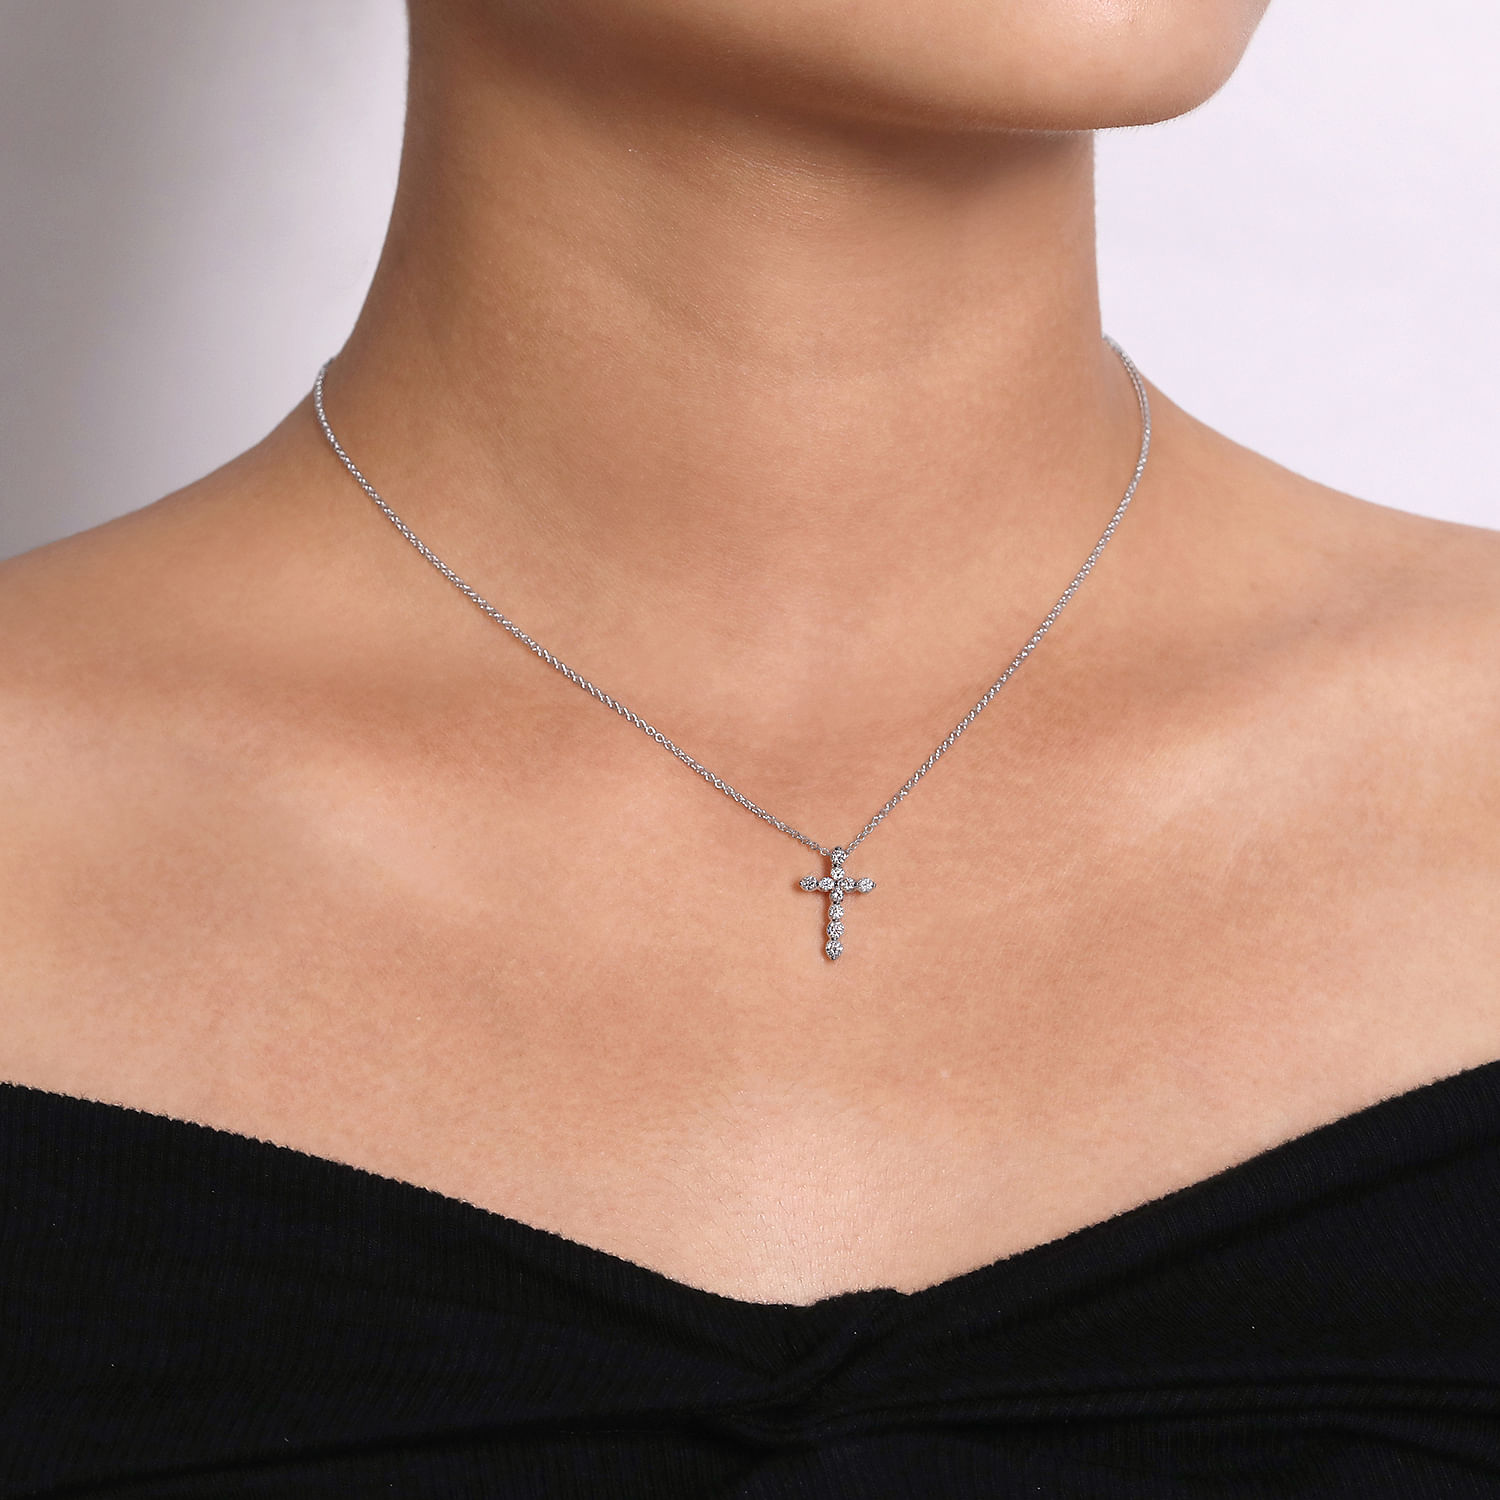 14K White Gold Diamond Cross Pendant Necklace